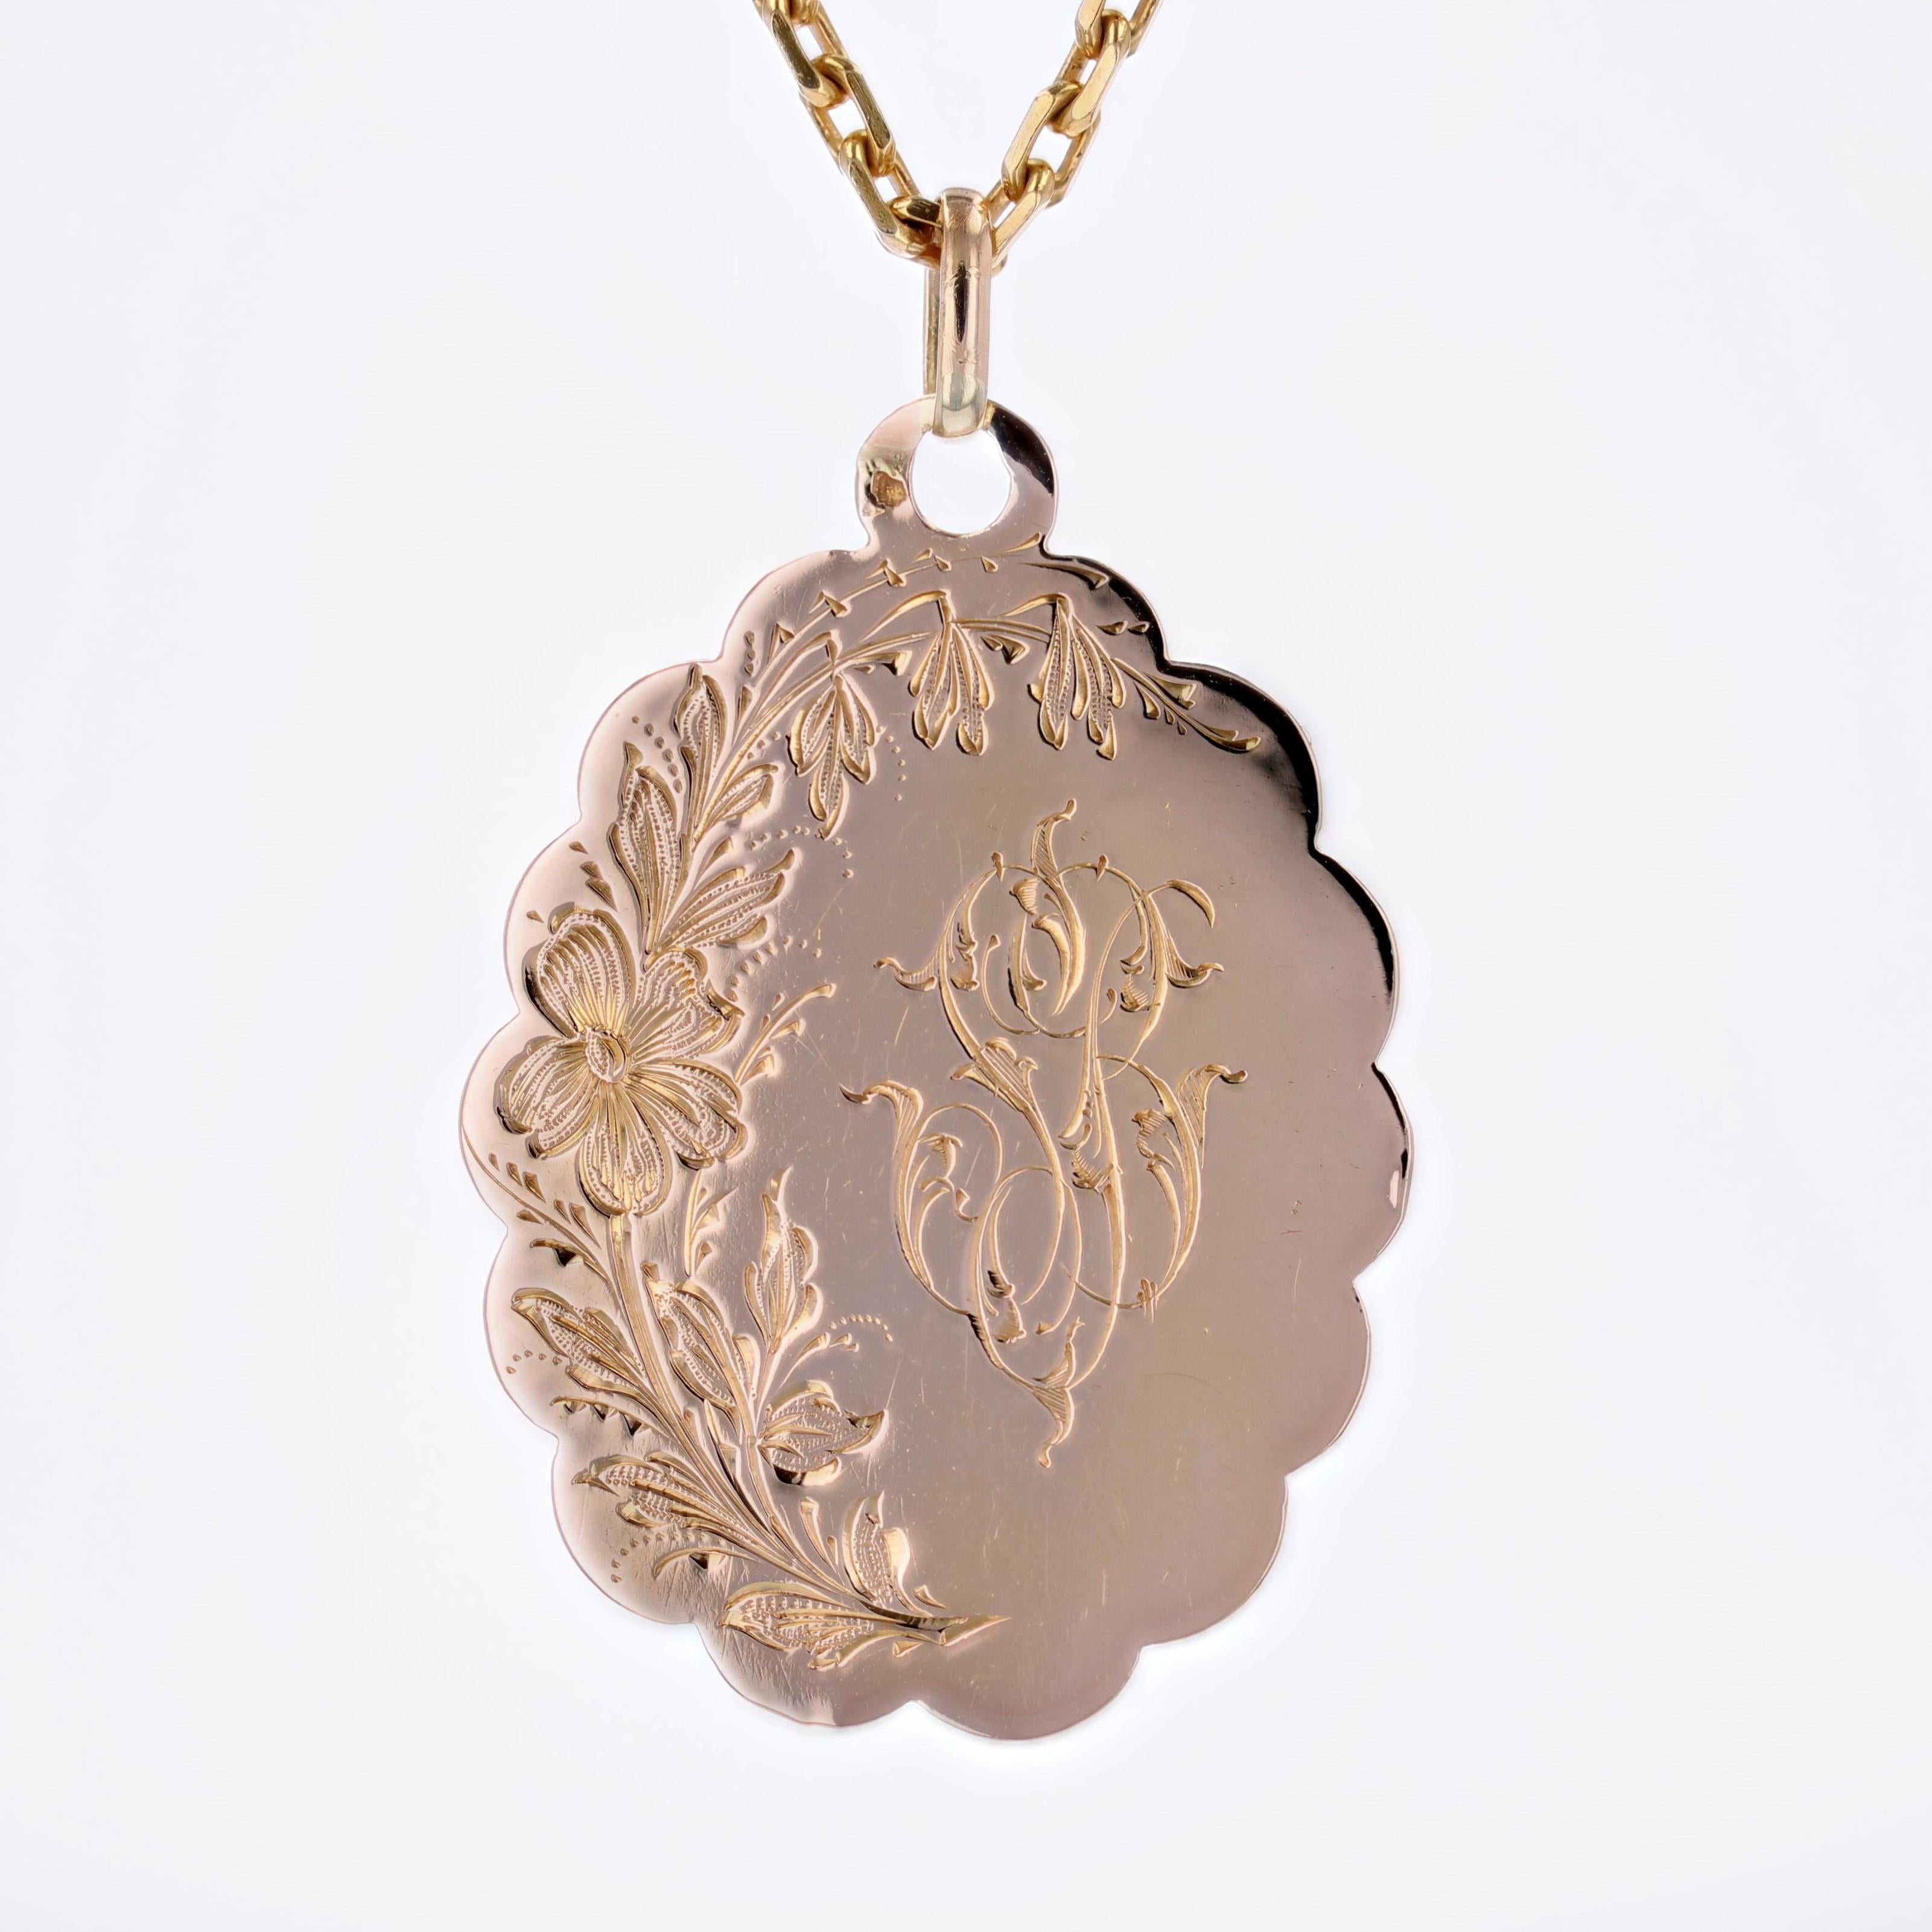 Napoleon III French 19th Century 18 Karat Rose Gold Engraved Medal